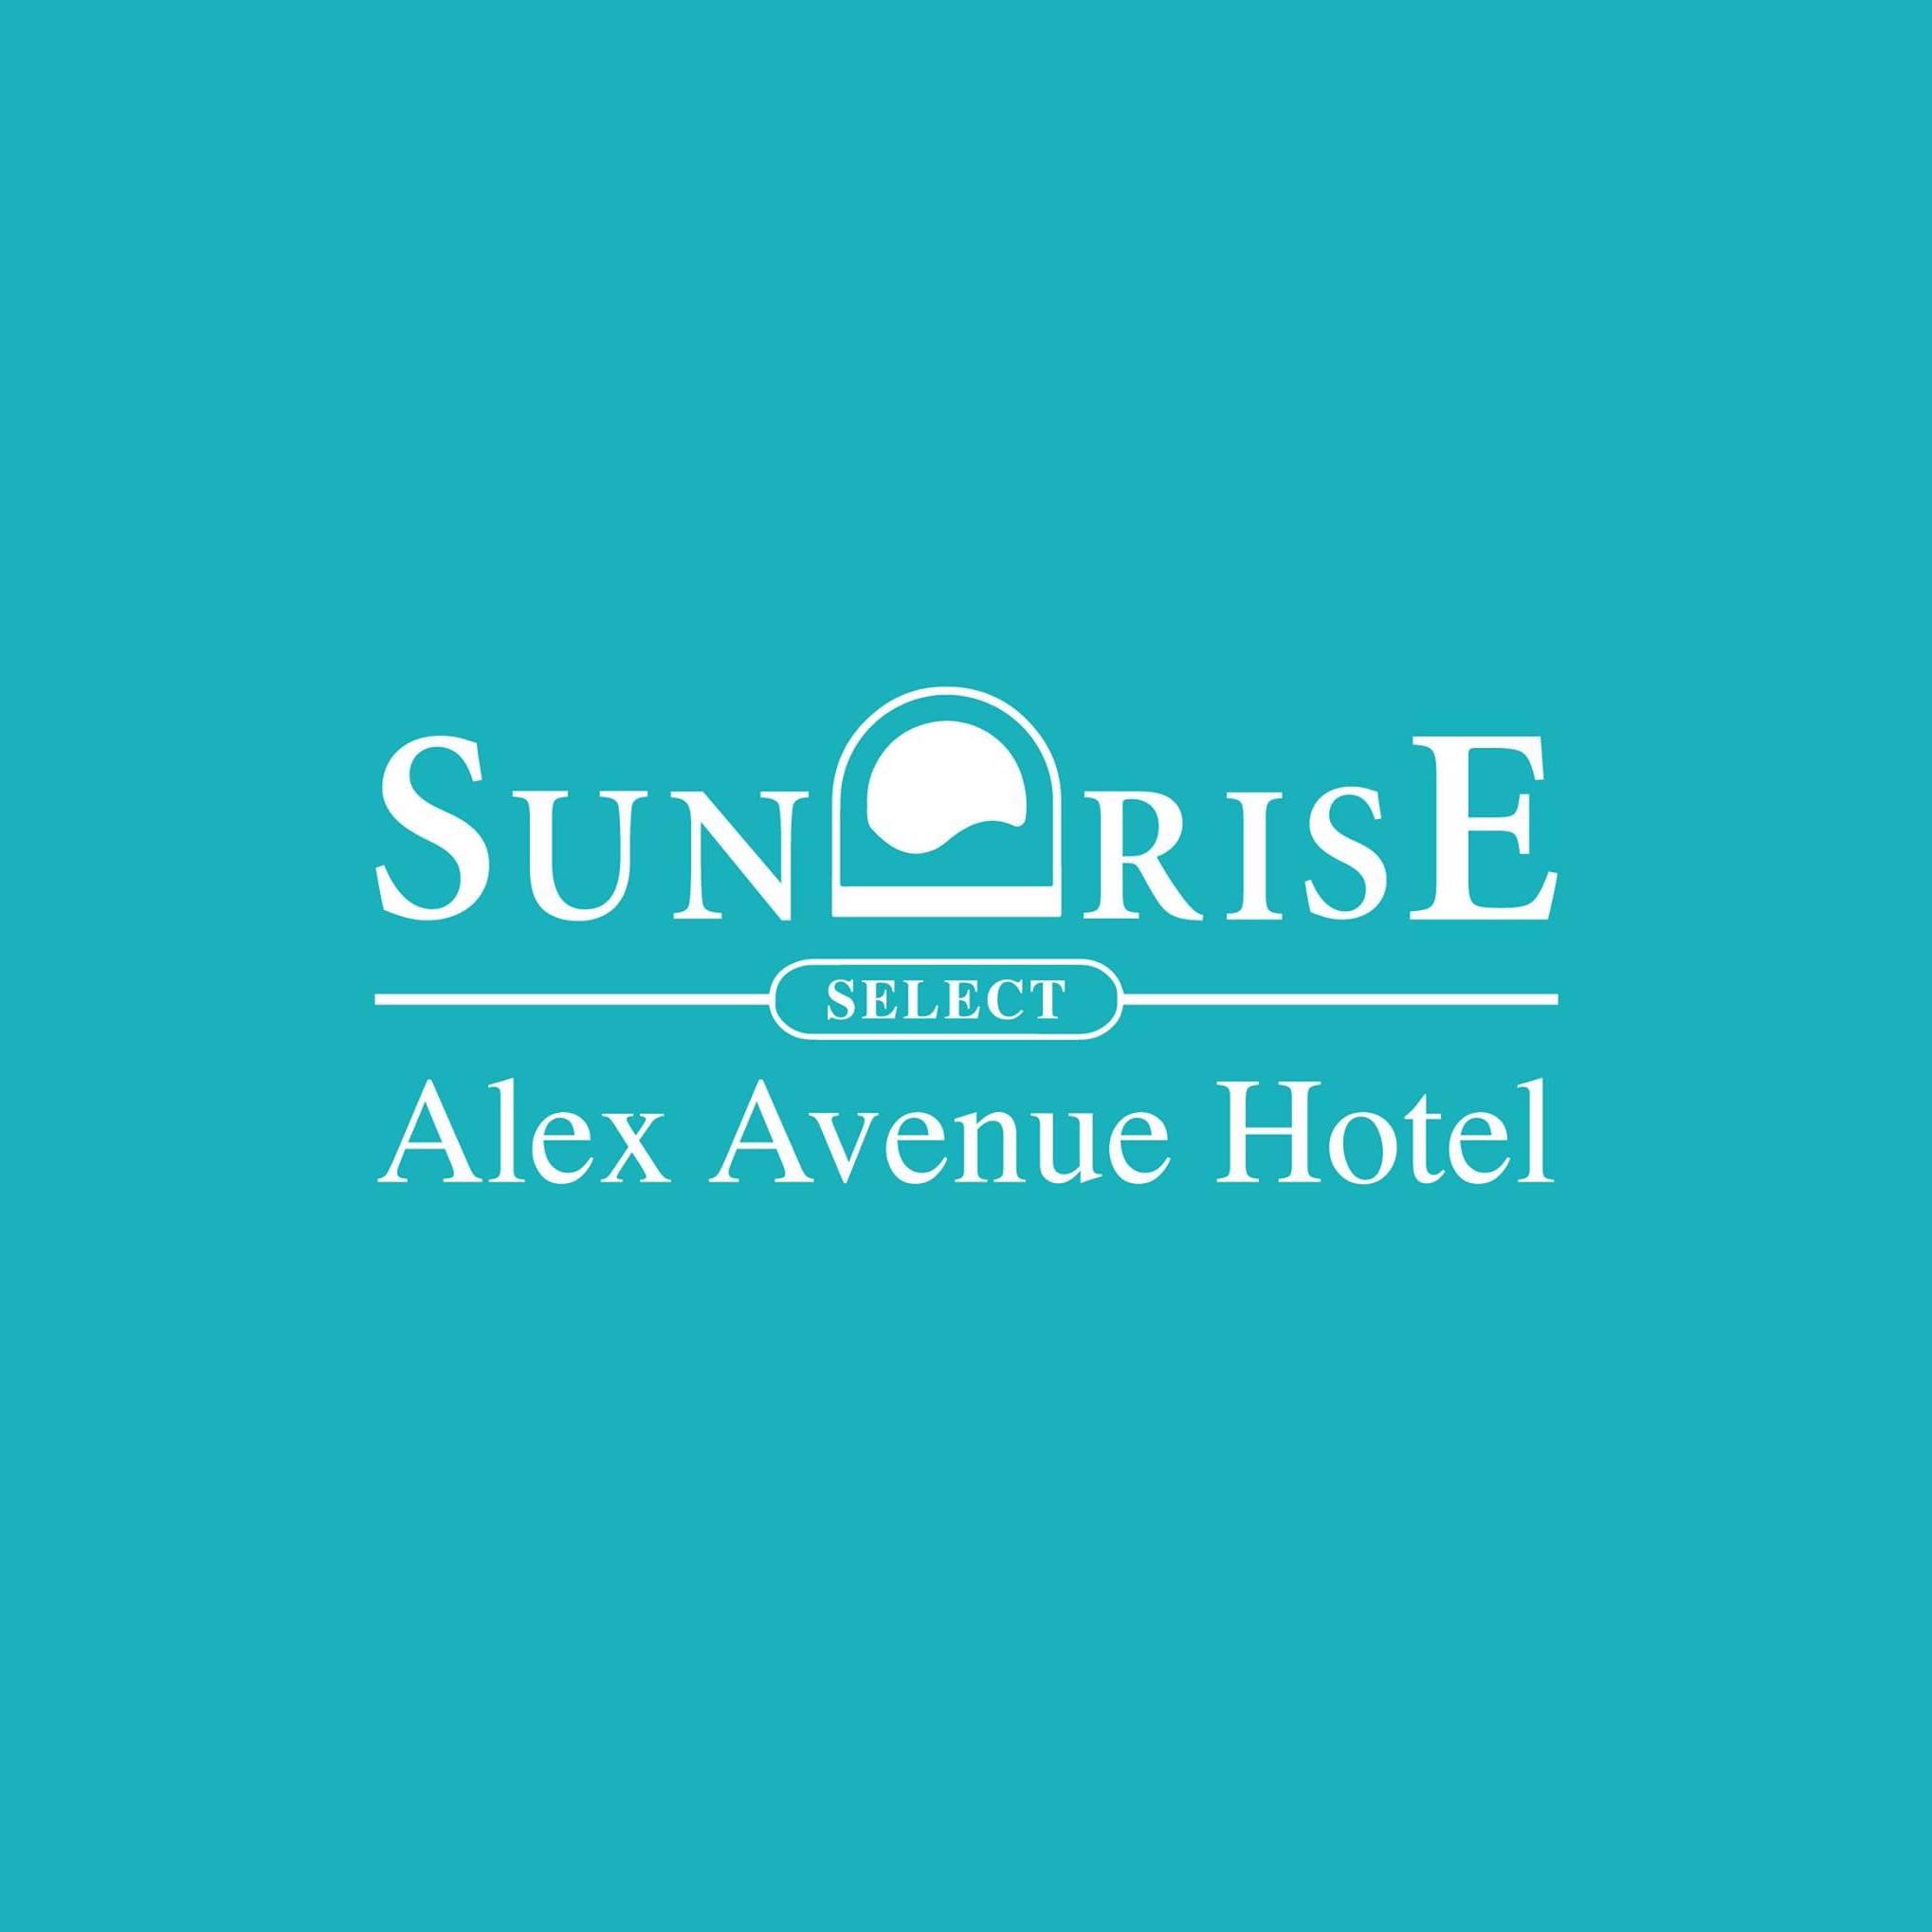 SUNRISE Alex Avenue Hotel